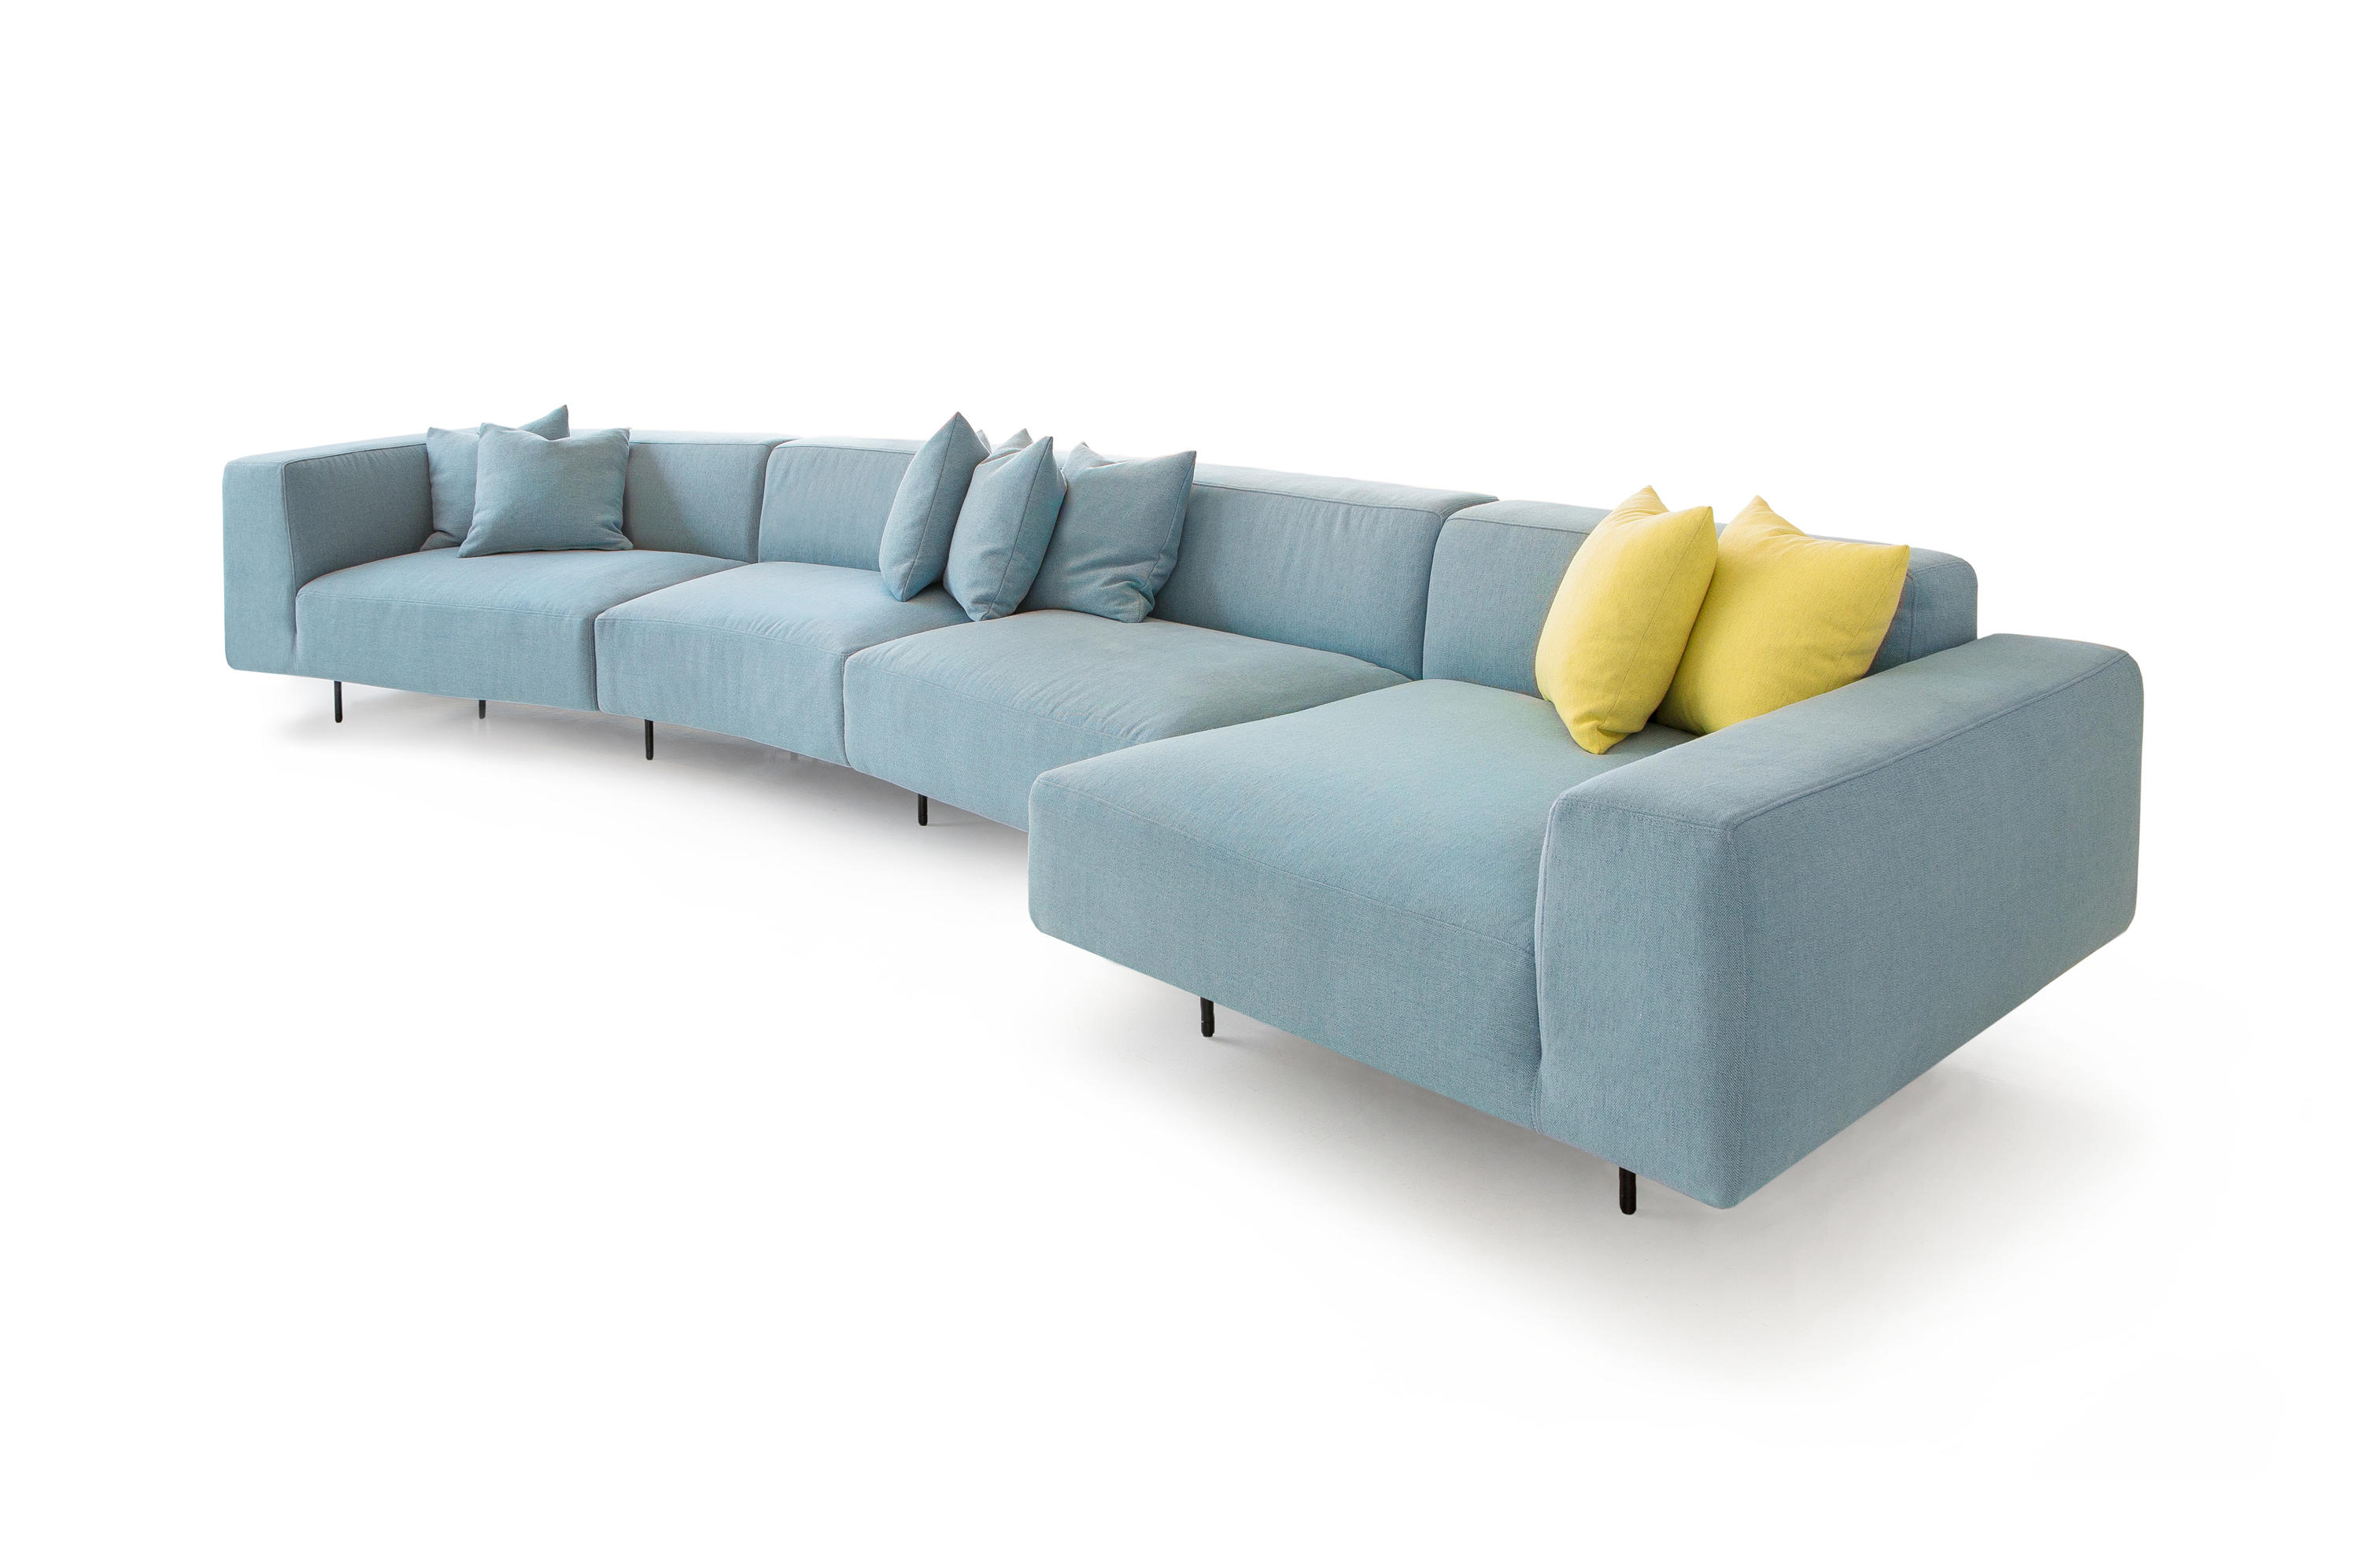 ENDLESS MODULAR SOFA Lounge sofas from Bensen